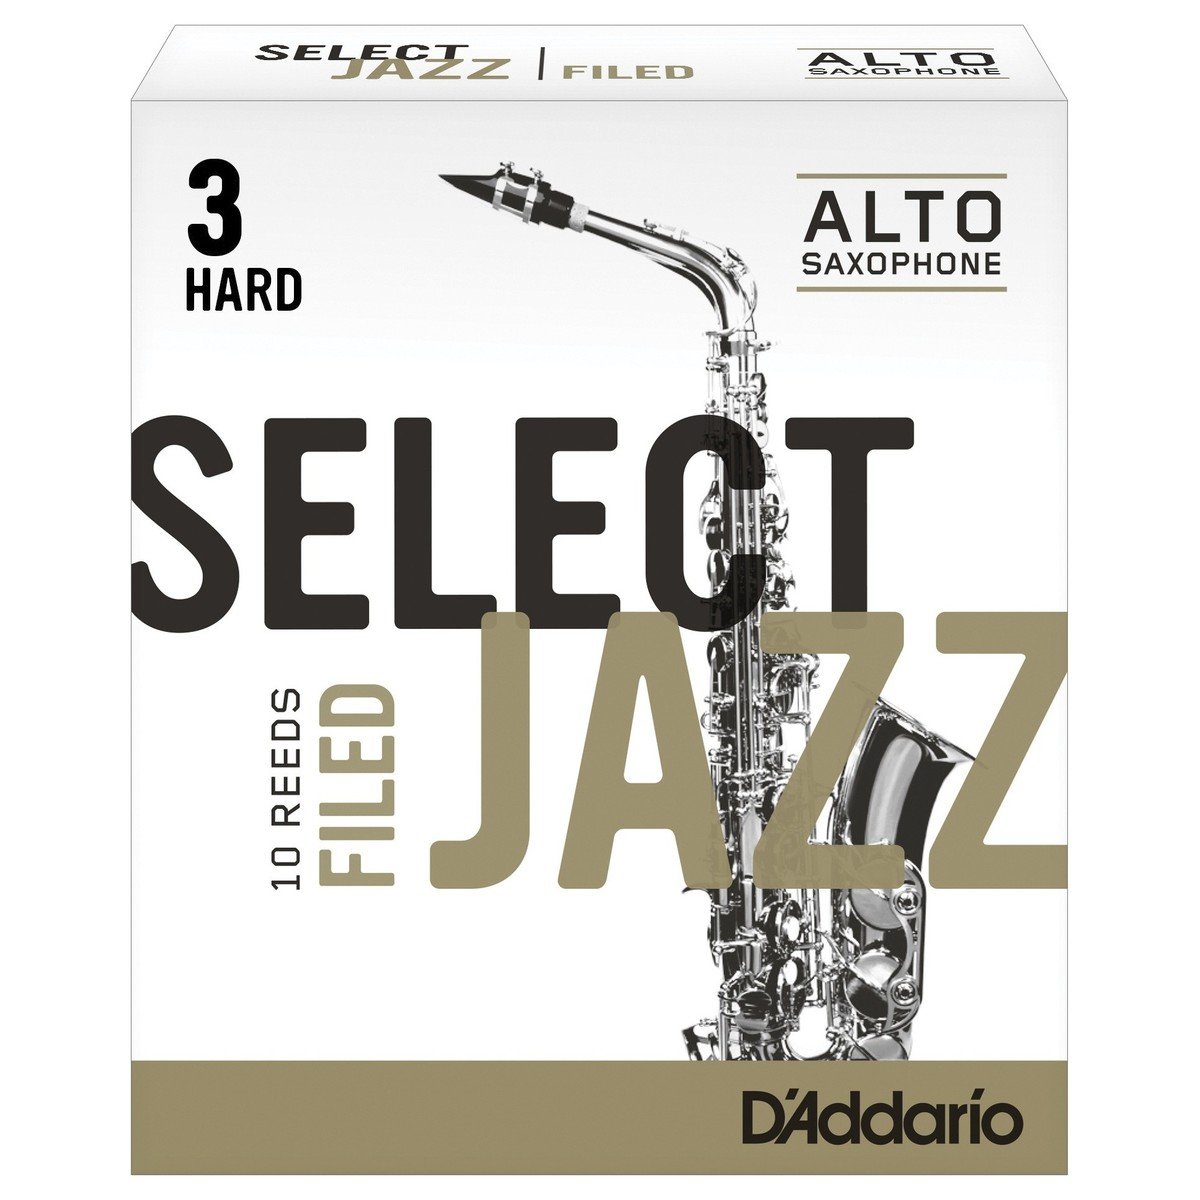 D'Addario Select Jazz Filed plátek pro alt saxofon tvrdost 3H